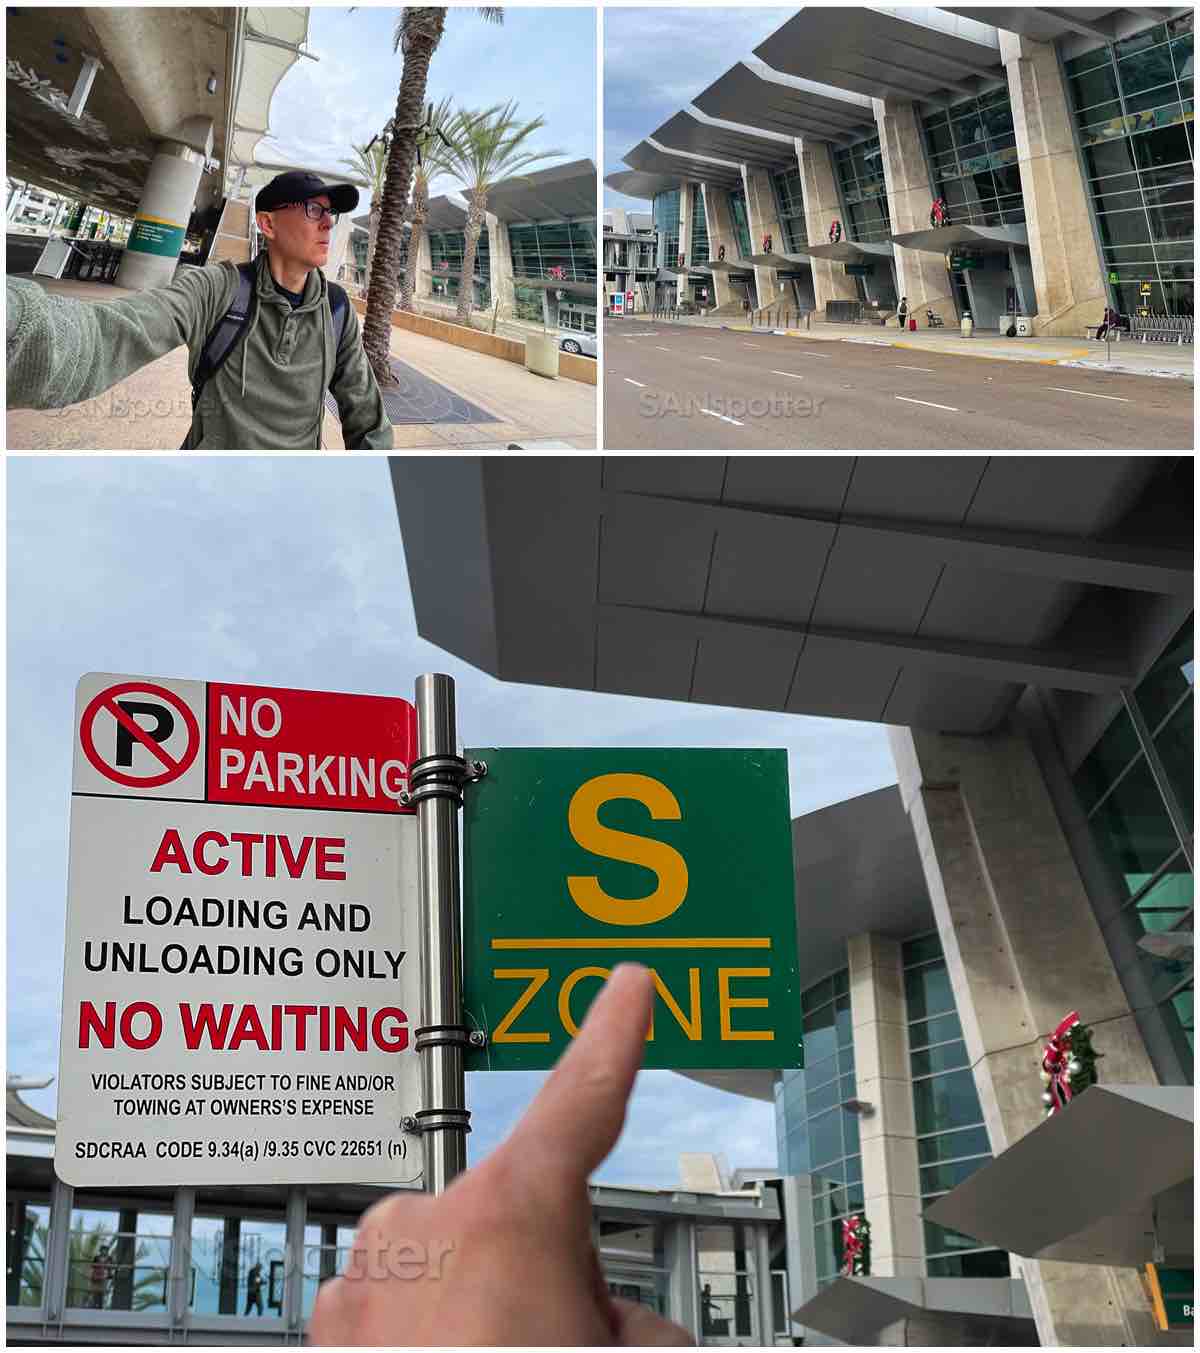 San Diego airport S zone